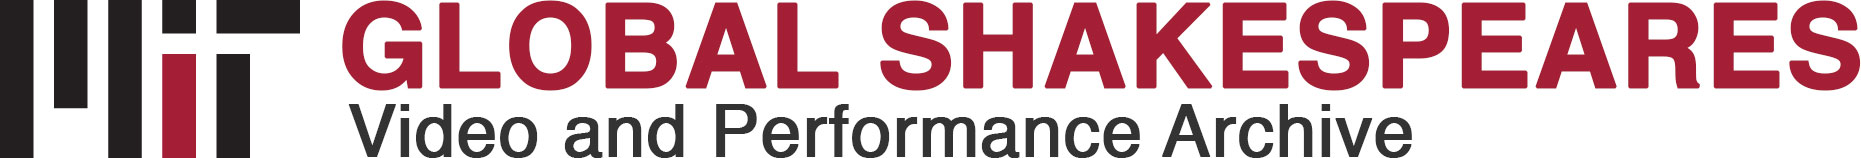 Logo "MIT Global Shakespeares", https://globalshakespeares.mit.edu/